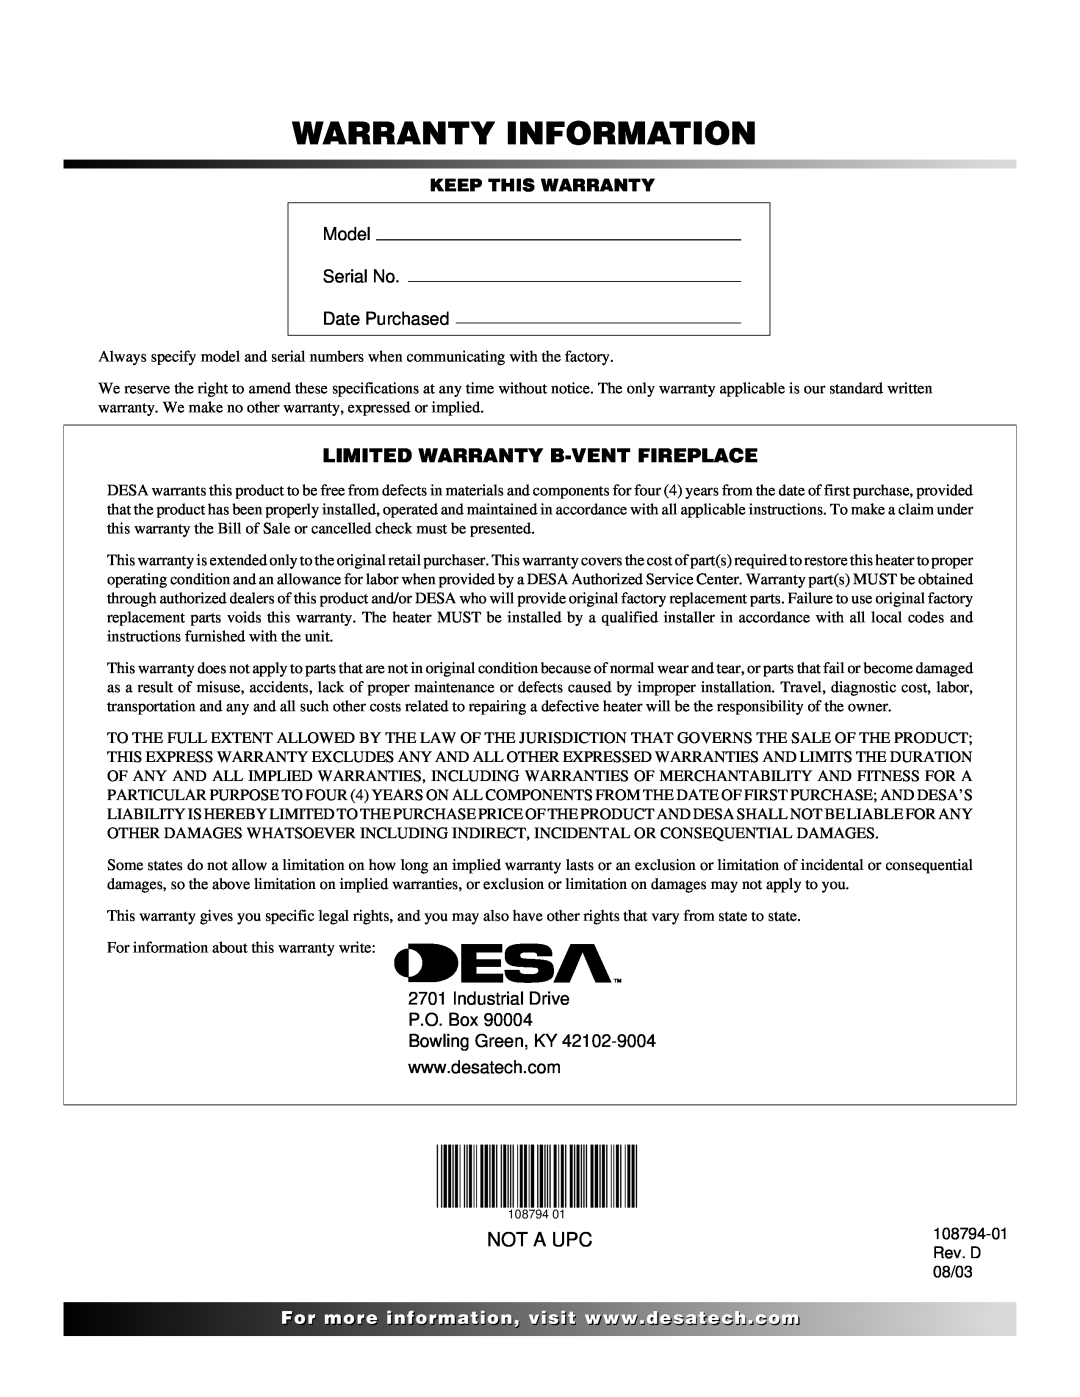 Desa VP325E(B) Warranty Information, Limited Warranty B-Vent Fireplace, Not A Upc, Keep This Warranty 